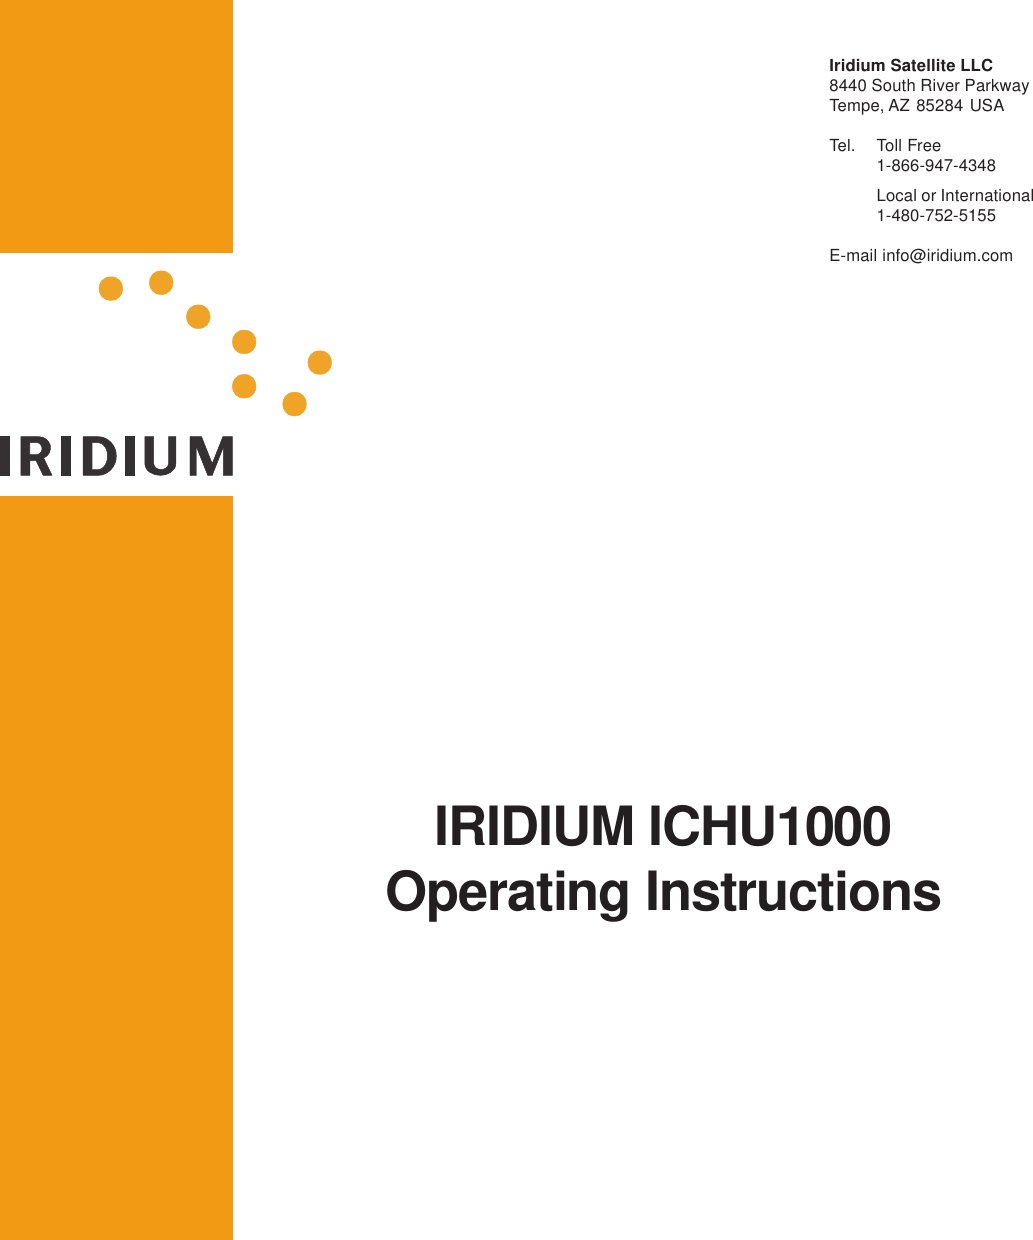 IRIDIUM ICHU1000Operating InstructionsIridium Satellite LLC8440 South River ParkwayTempe, AZ 85284 USATel. Toll Free1-866-947-4348Local or International1-480-752-5155E-mail info@iridium.com